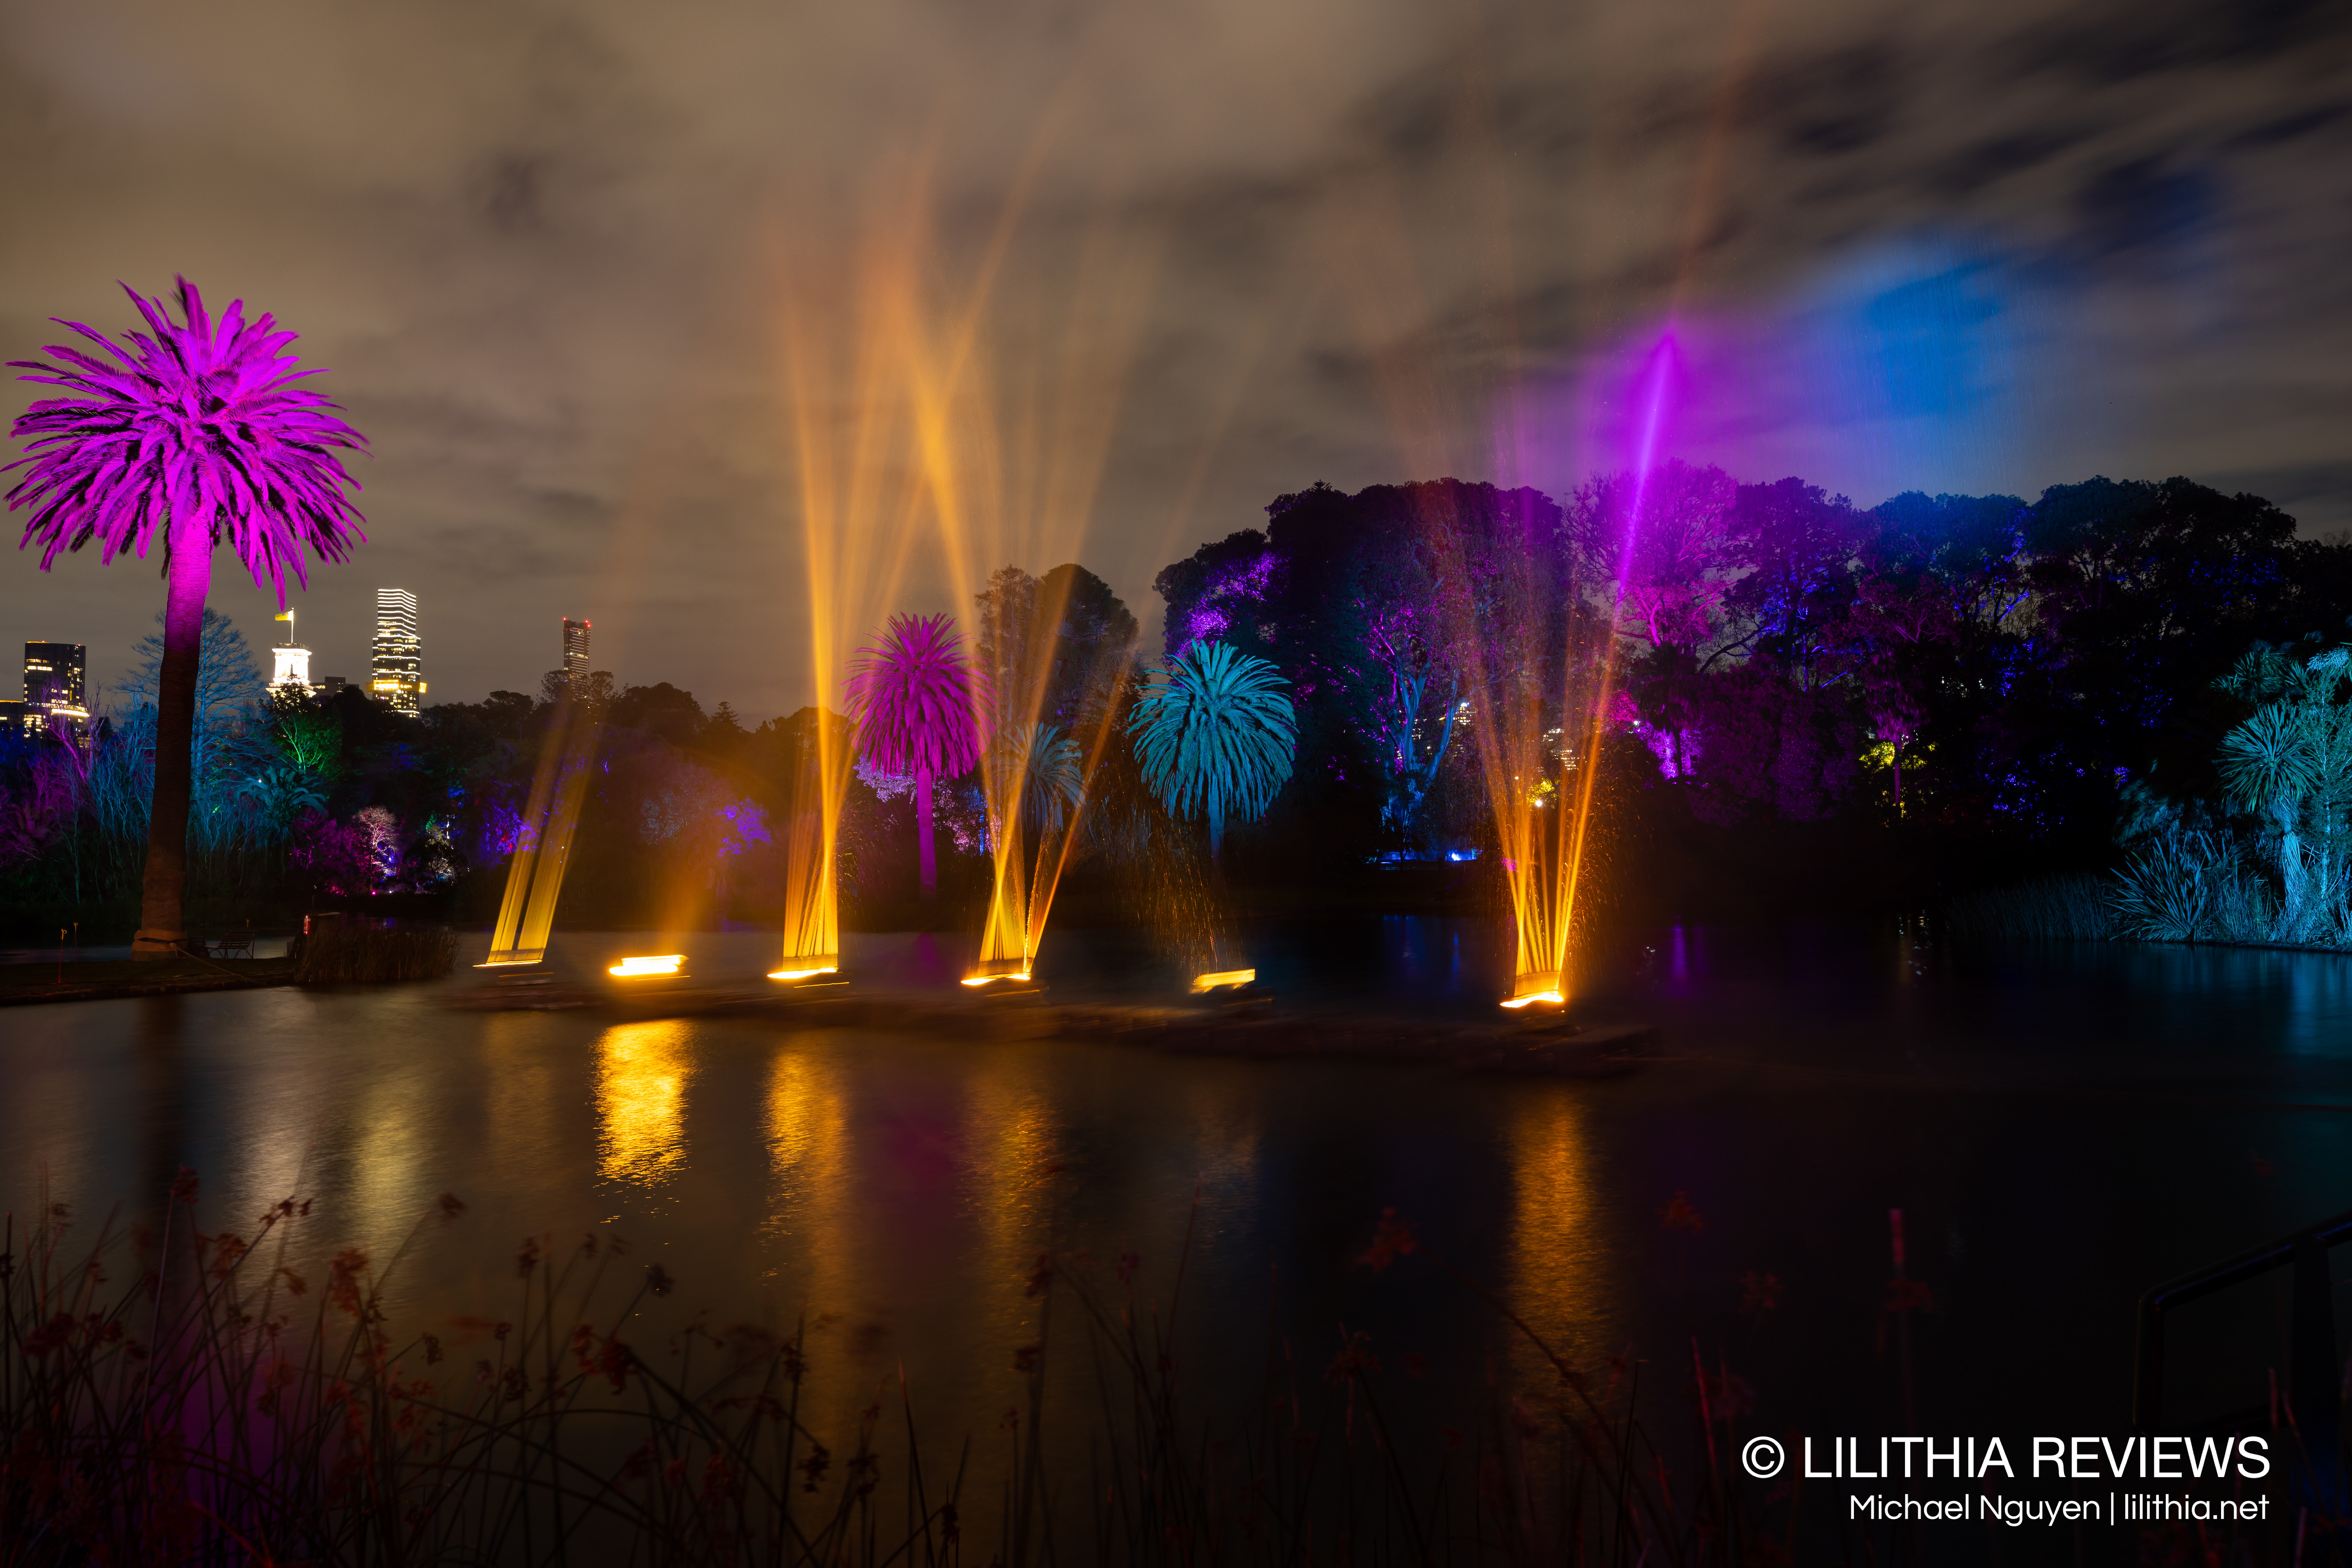 LIGHTSCAPE, Royal Botanical Gardens Victoria – Event Review